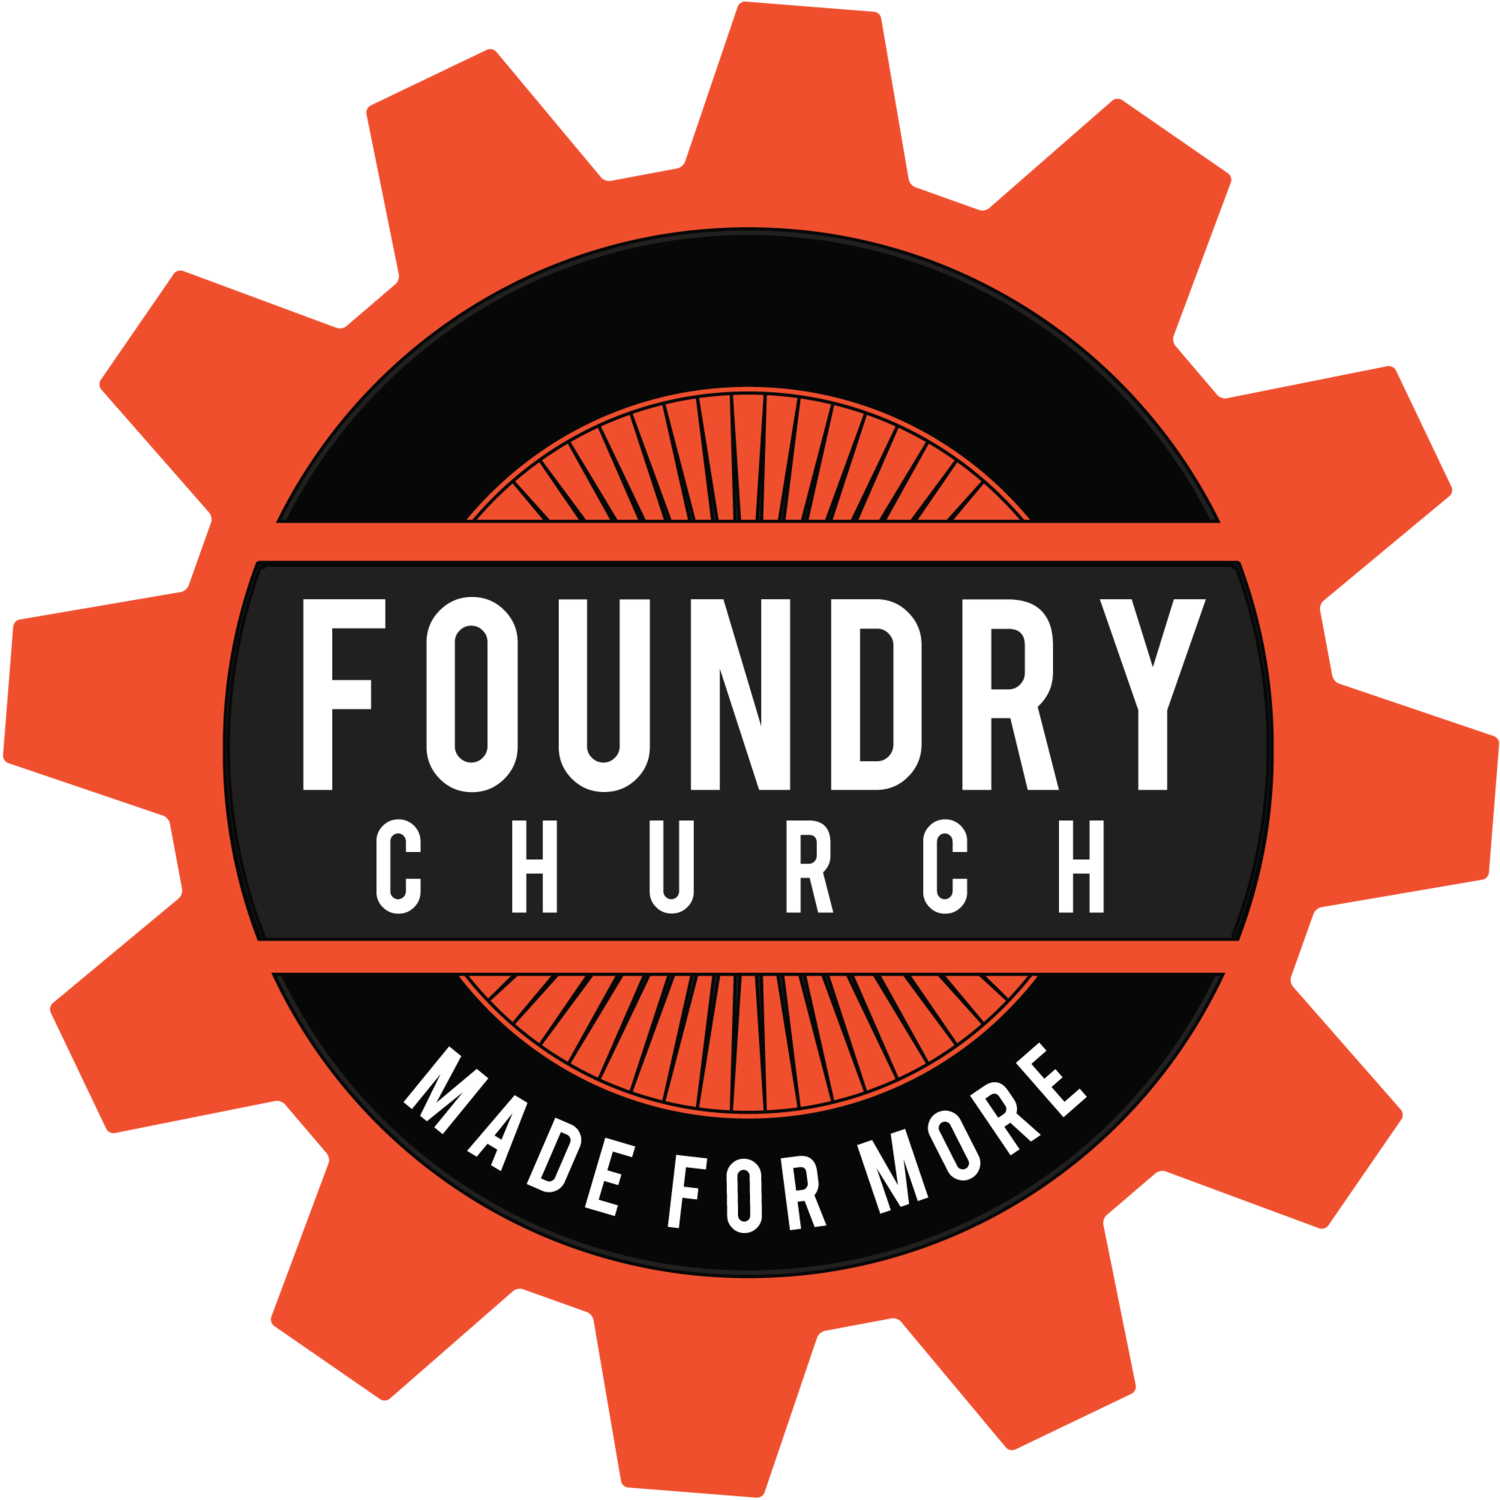 FOUNDRY CHURCH